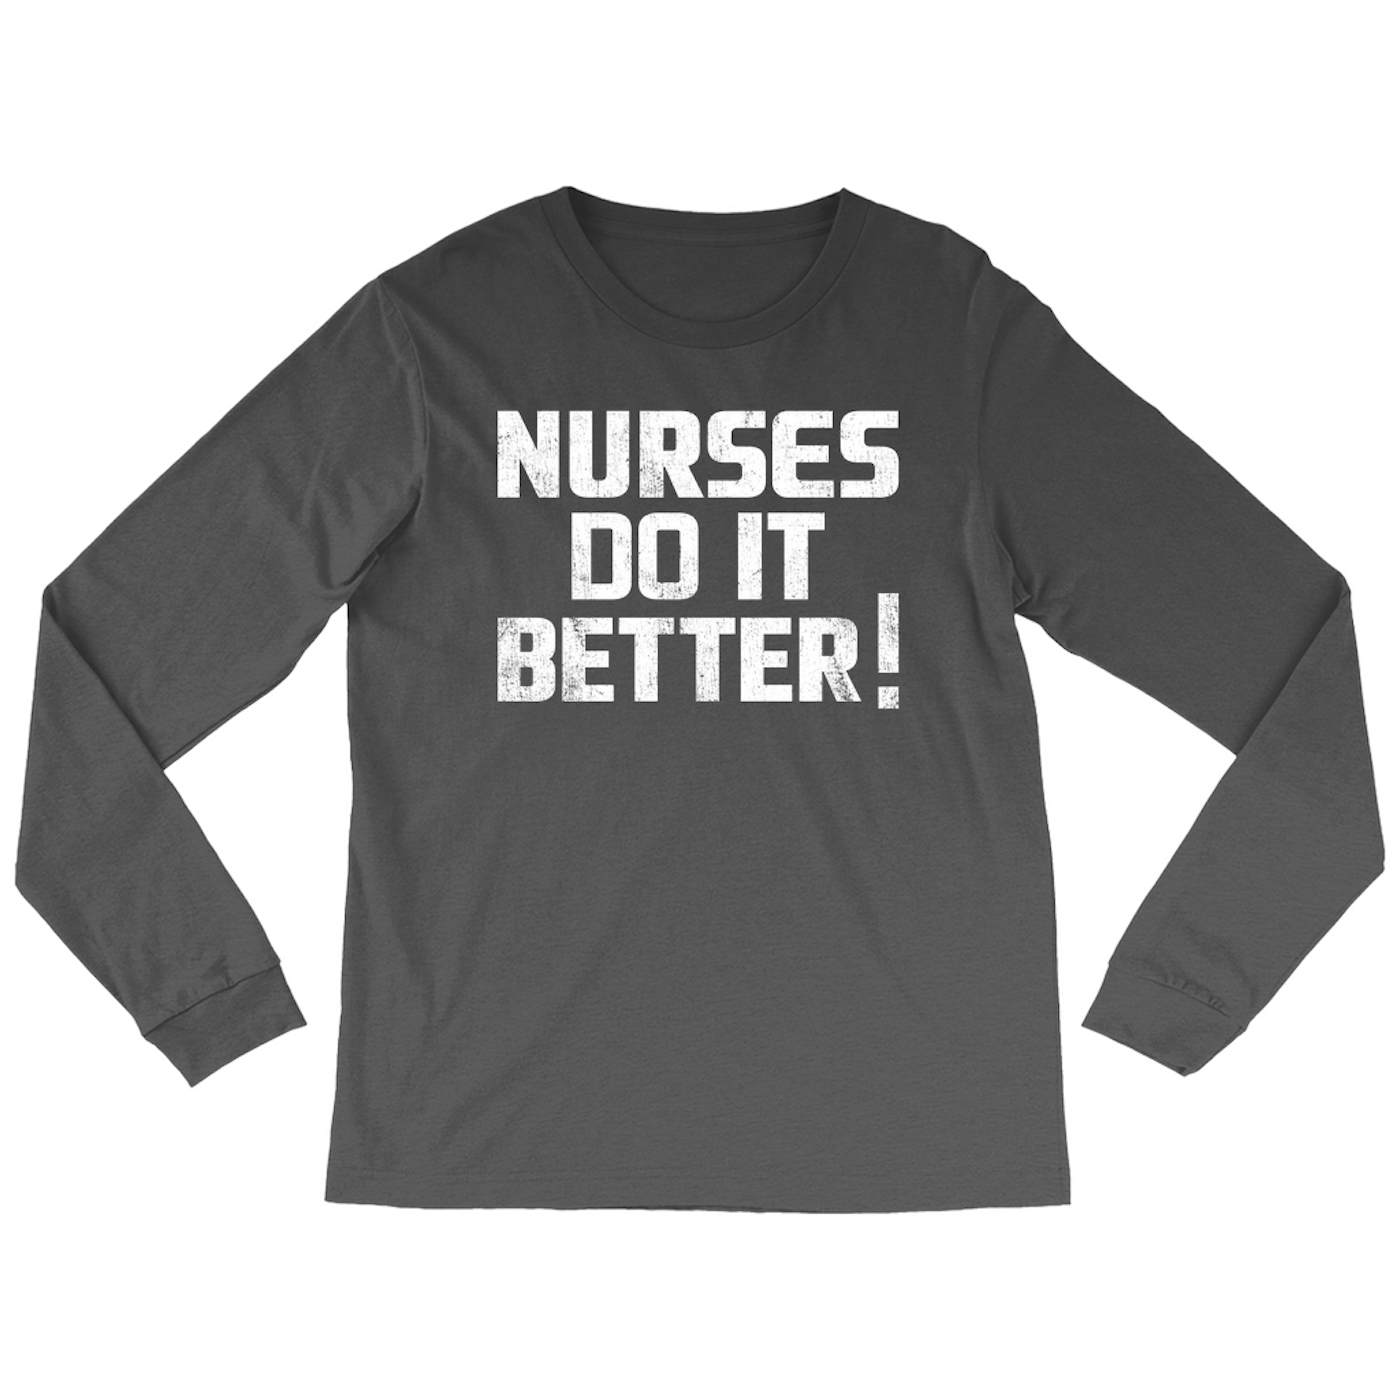 Led Zeppelin Long Sleeve Shirt | Nurses Do It Better! Worn By Robert Plant Led Zeppelin Shirt